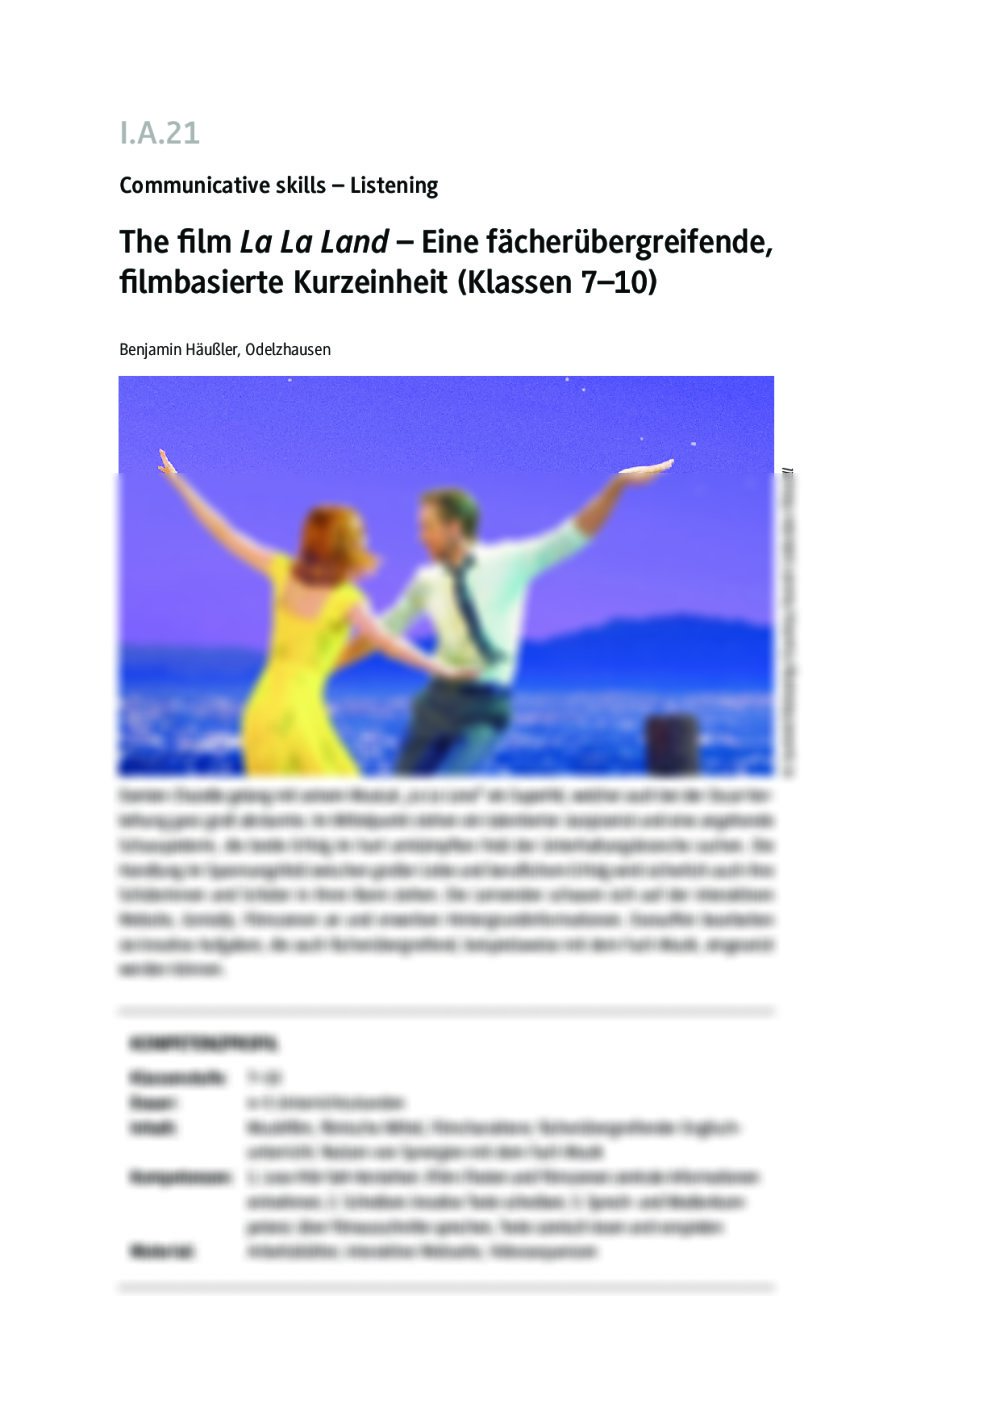 The film "La La Land" - Seite 1